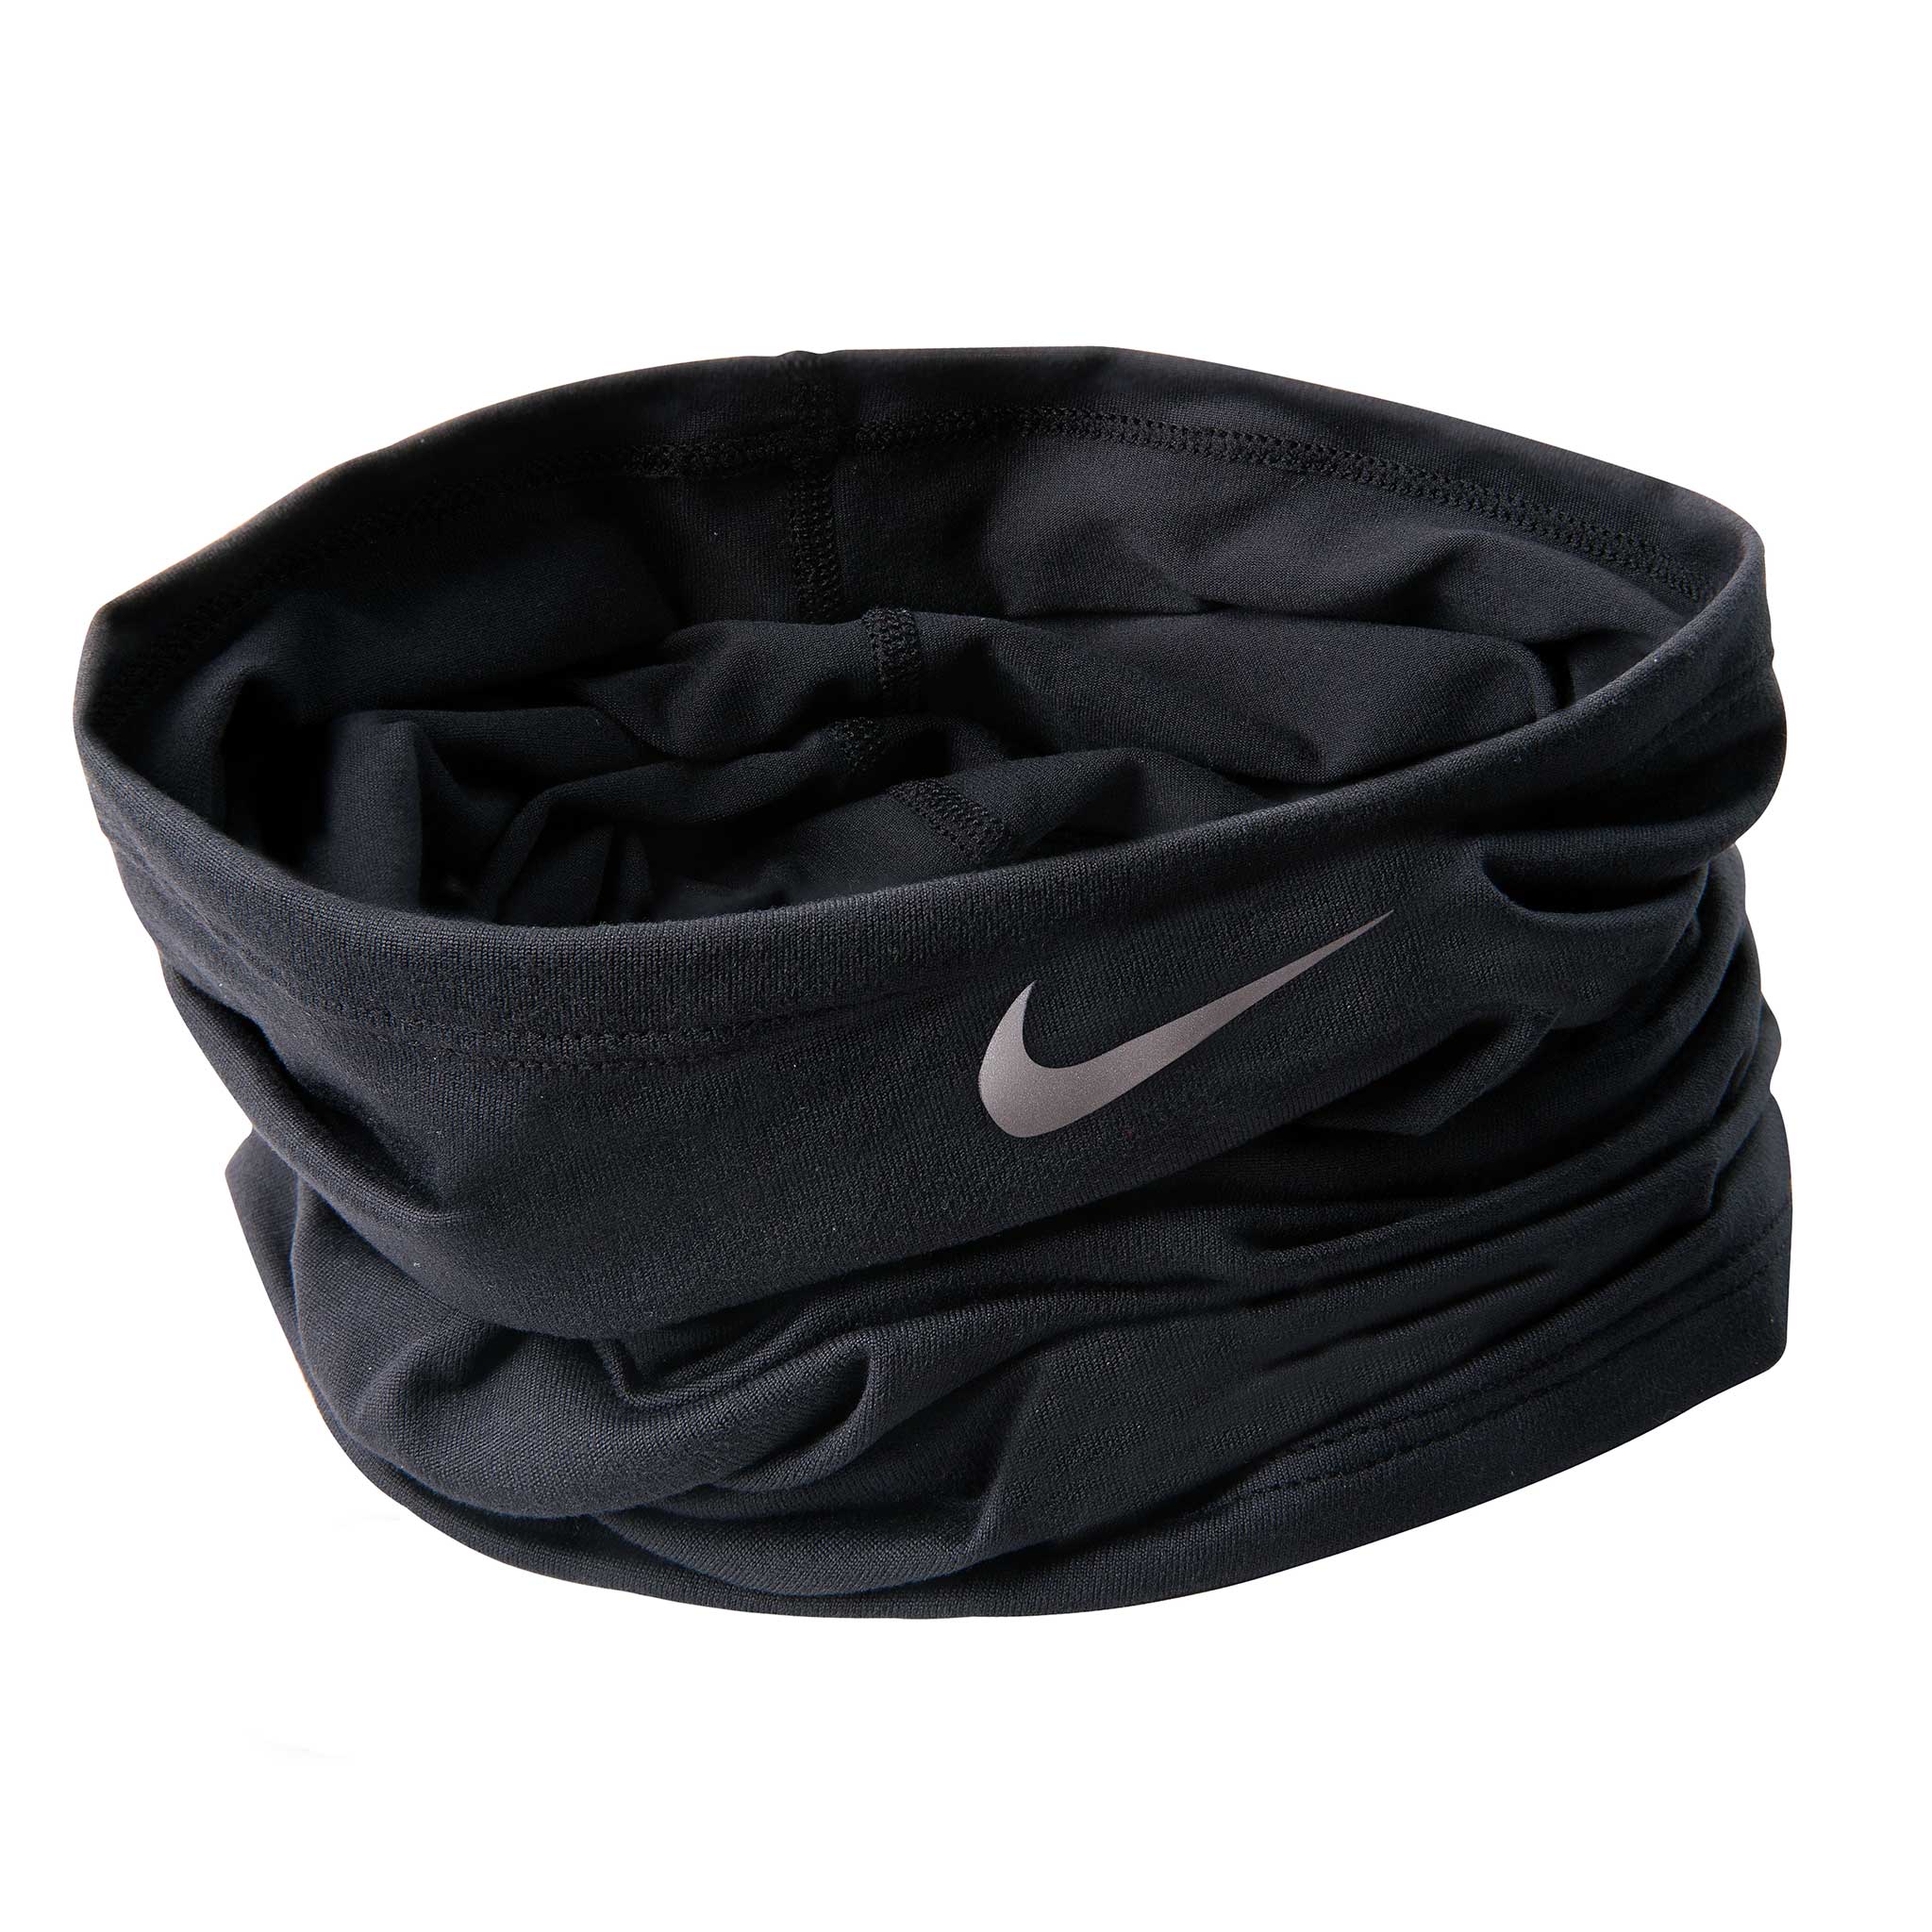 Nike Therma Fit Wrap cache-cou de course à pied - Soccer Sport Fitness